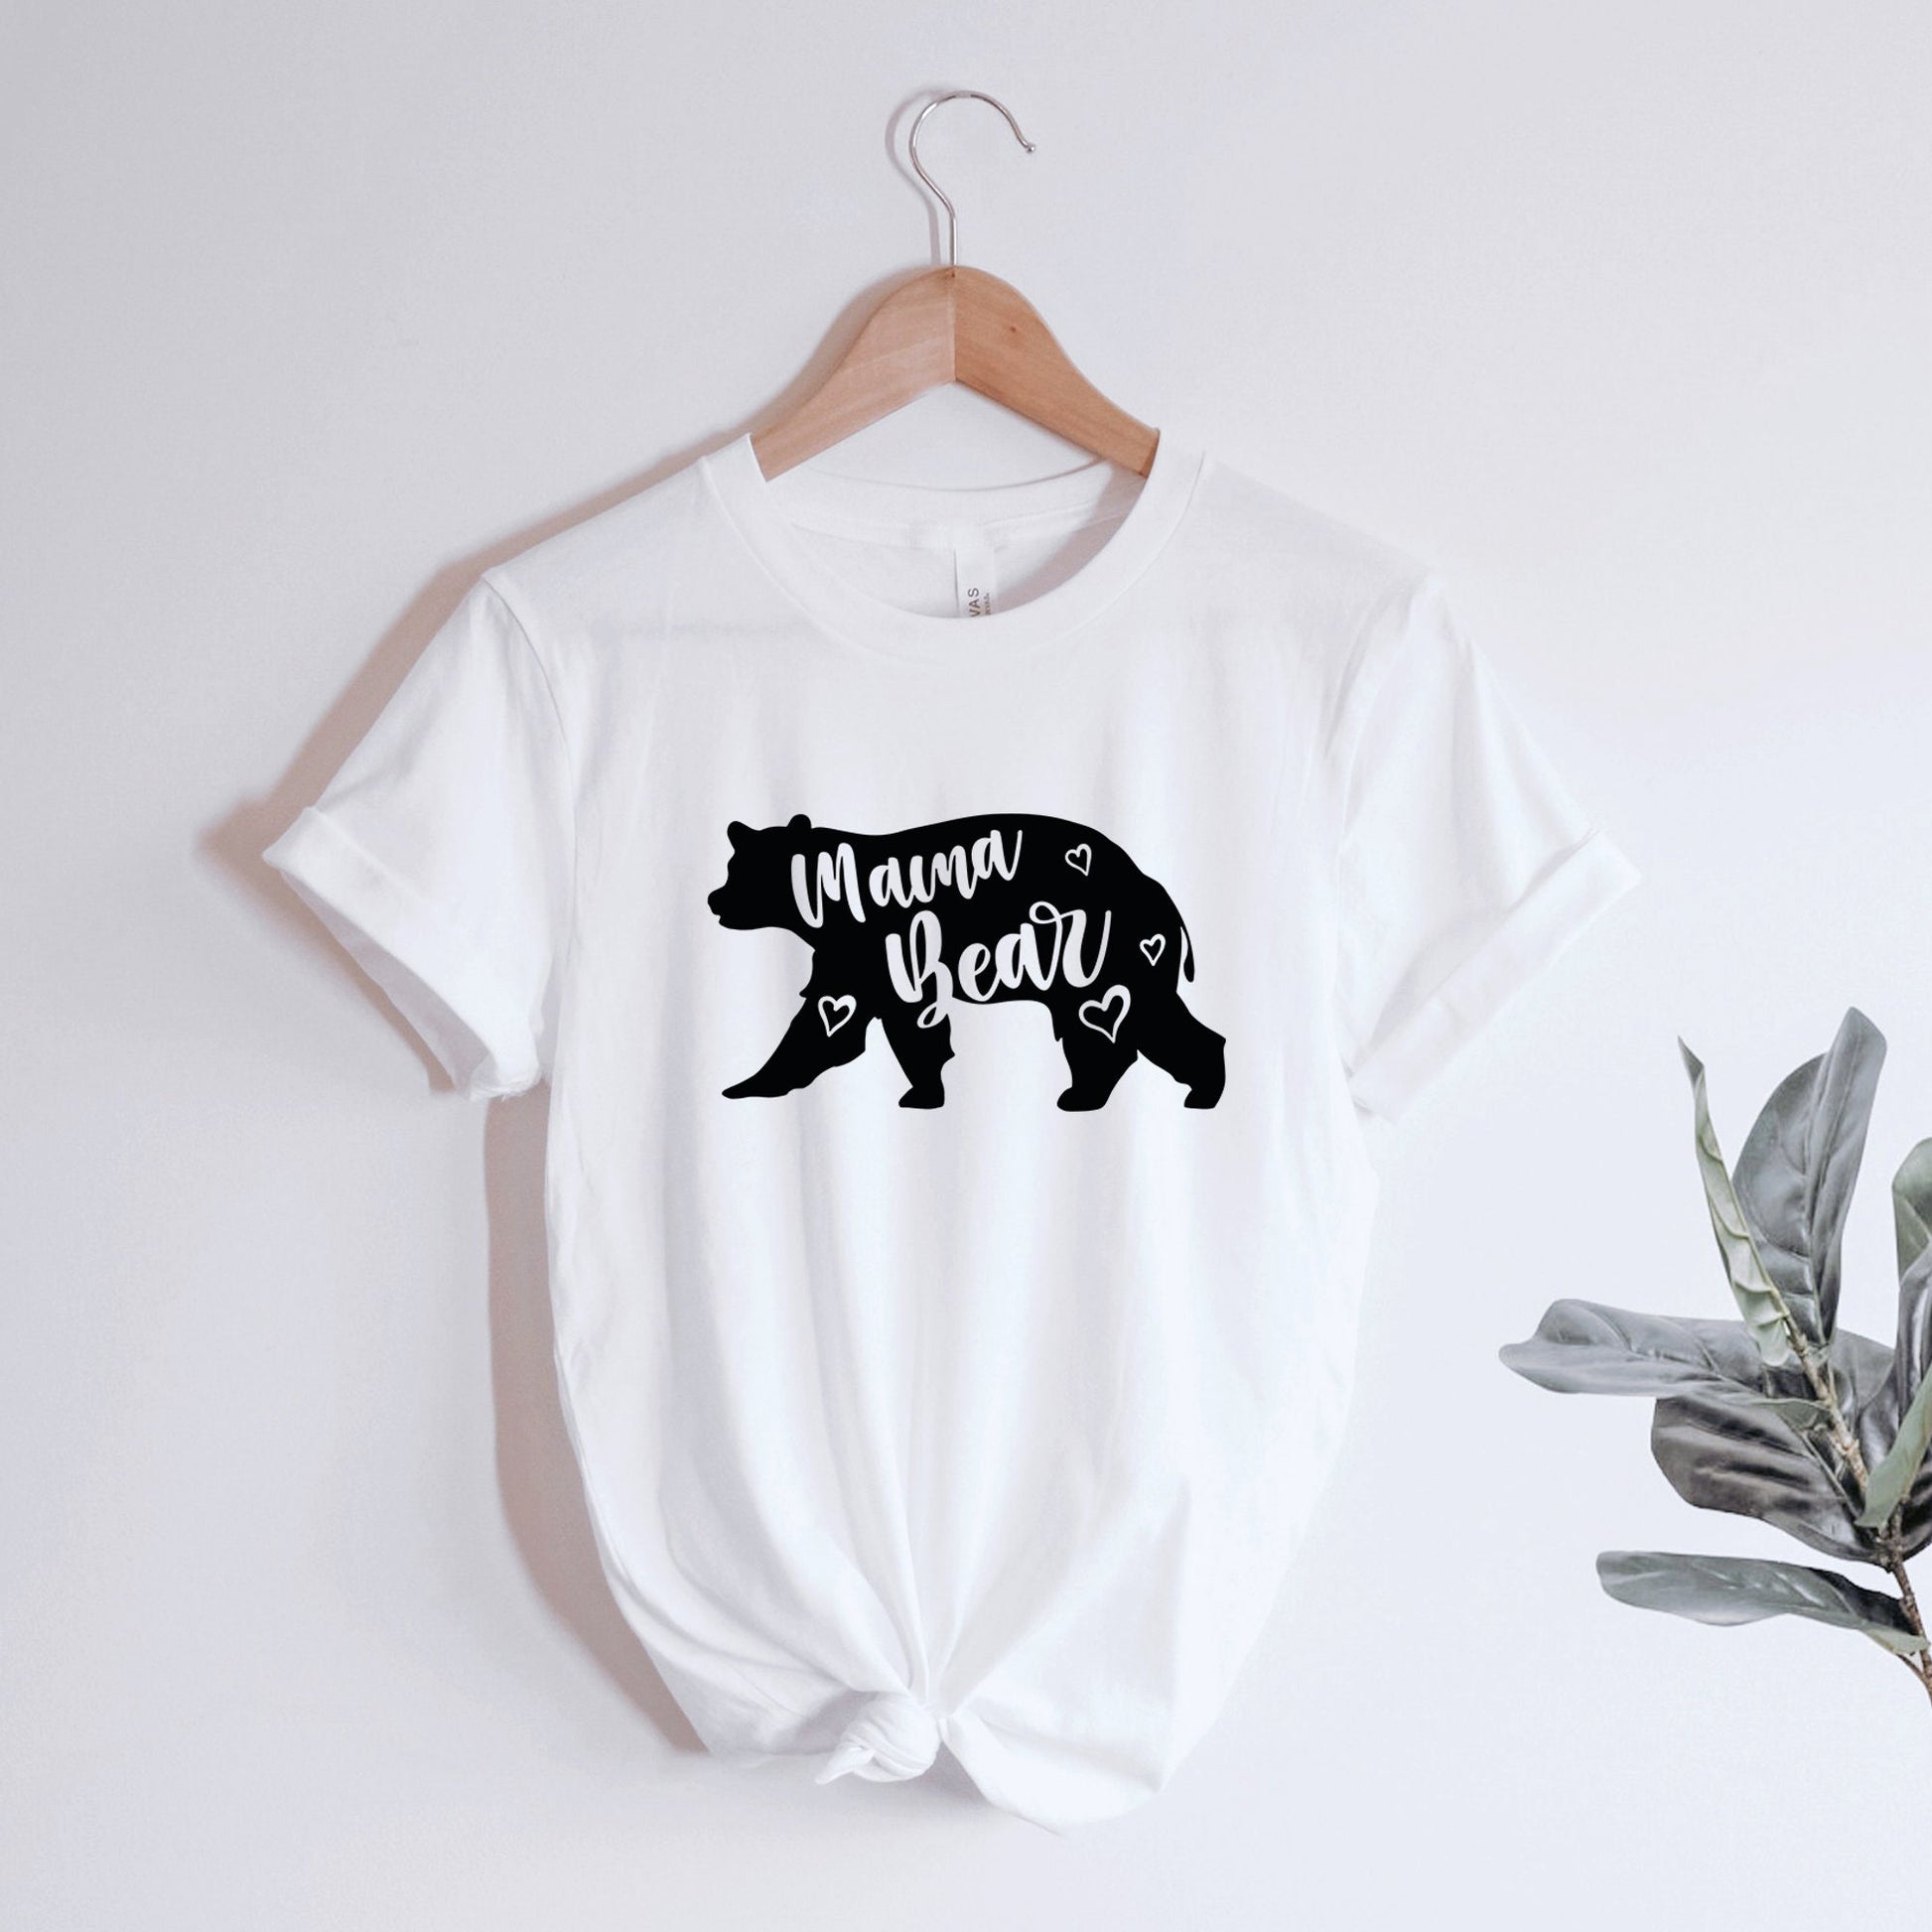 Mama Bear Shirt, Mom Shirts, Mom-life Shirt, Shirts for Moms, Trendy Mom T-Shirts, Cool Mom Shirts, Shirts for Moms